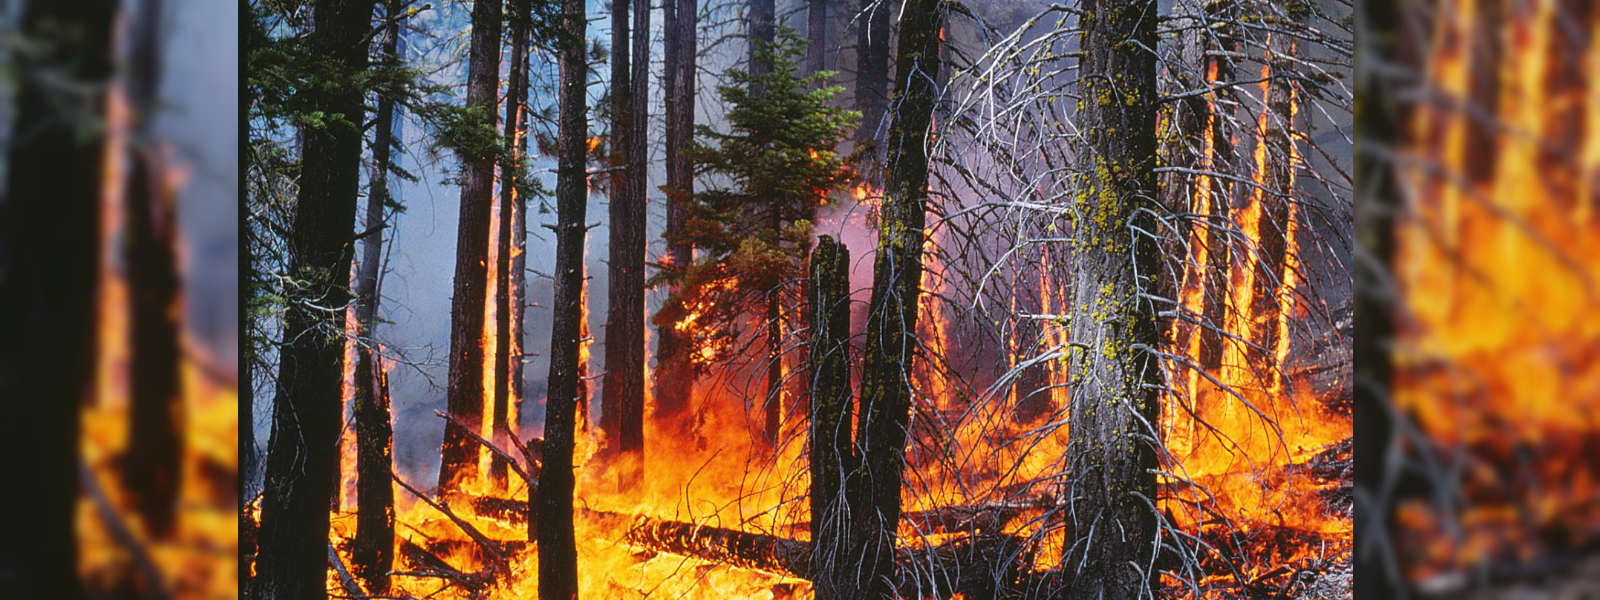 Wildfire destroys 30 acres of Kospotha reserve